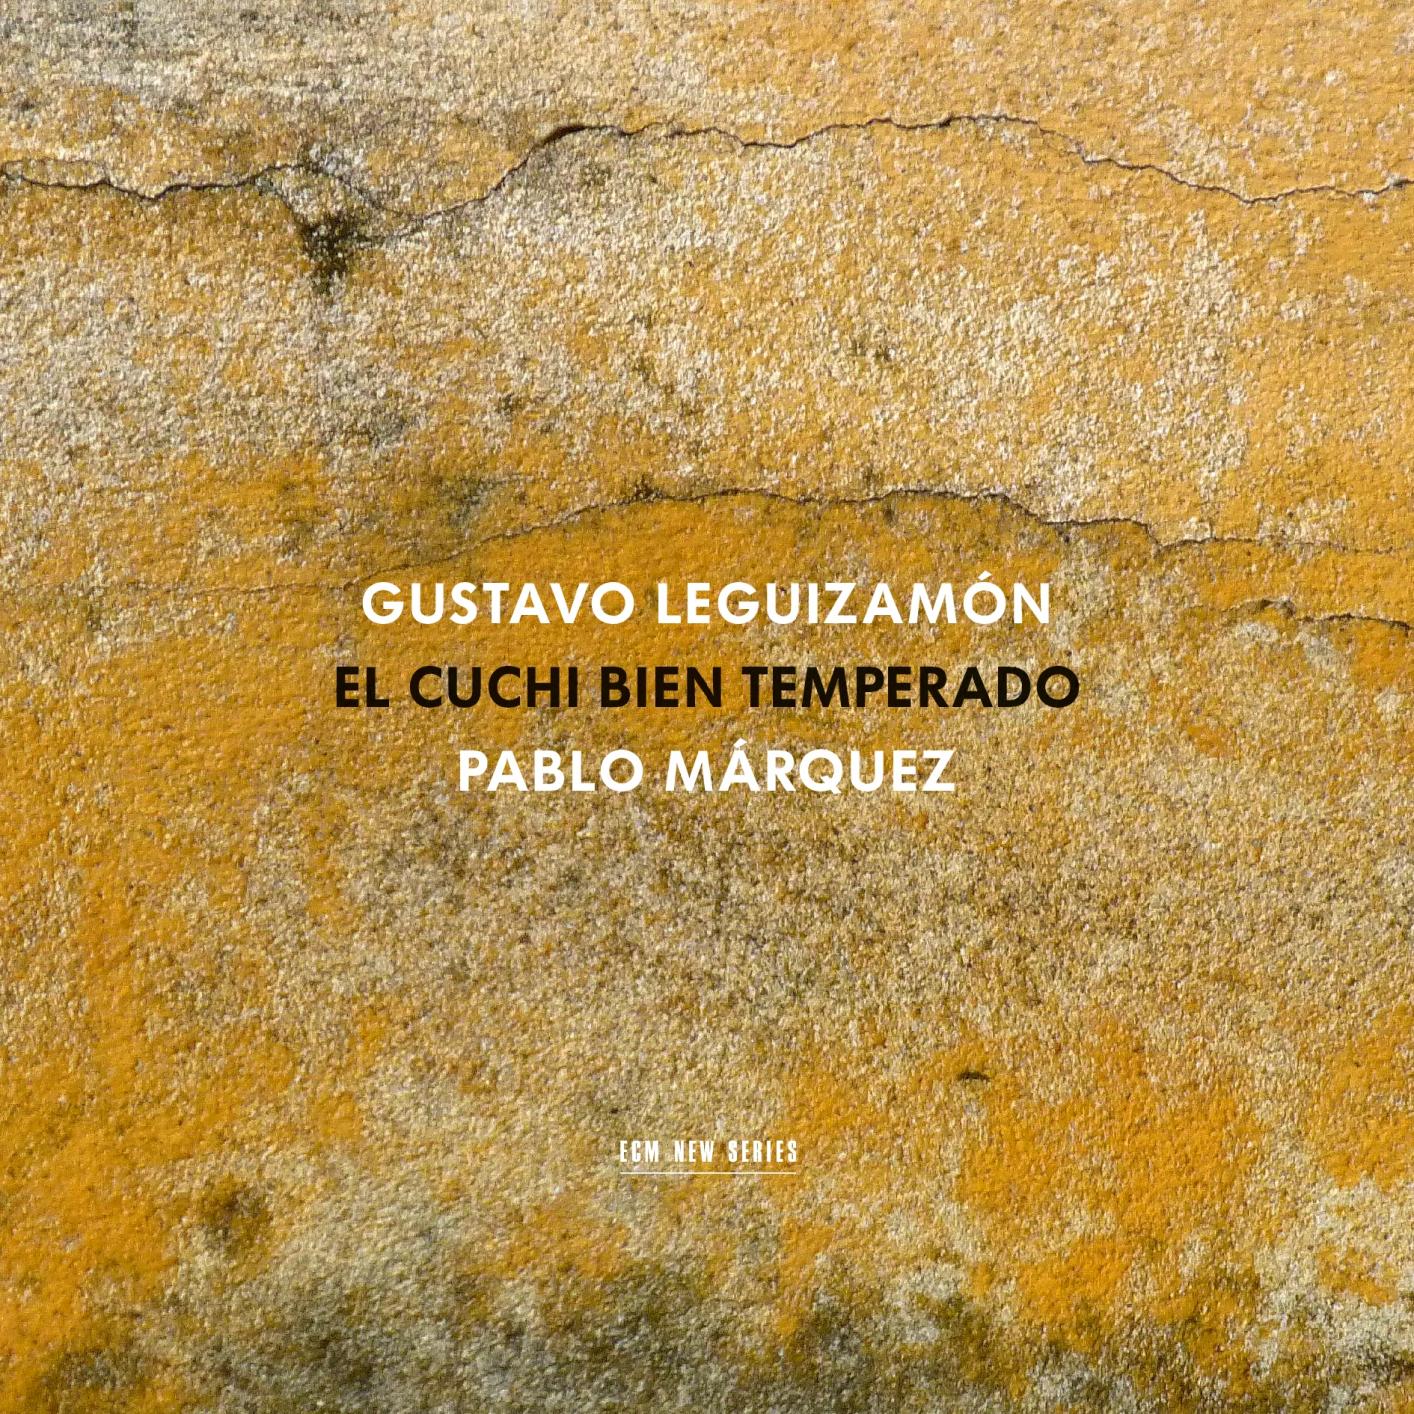 Pablo Marquez - Gustavo Leguizamon: El Cuchi bien temperado (2015) [FLAC 24bit/44,1kHz]